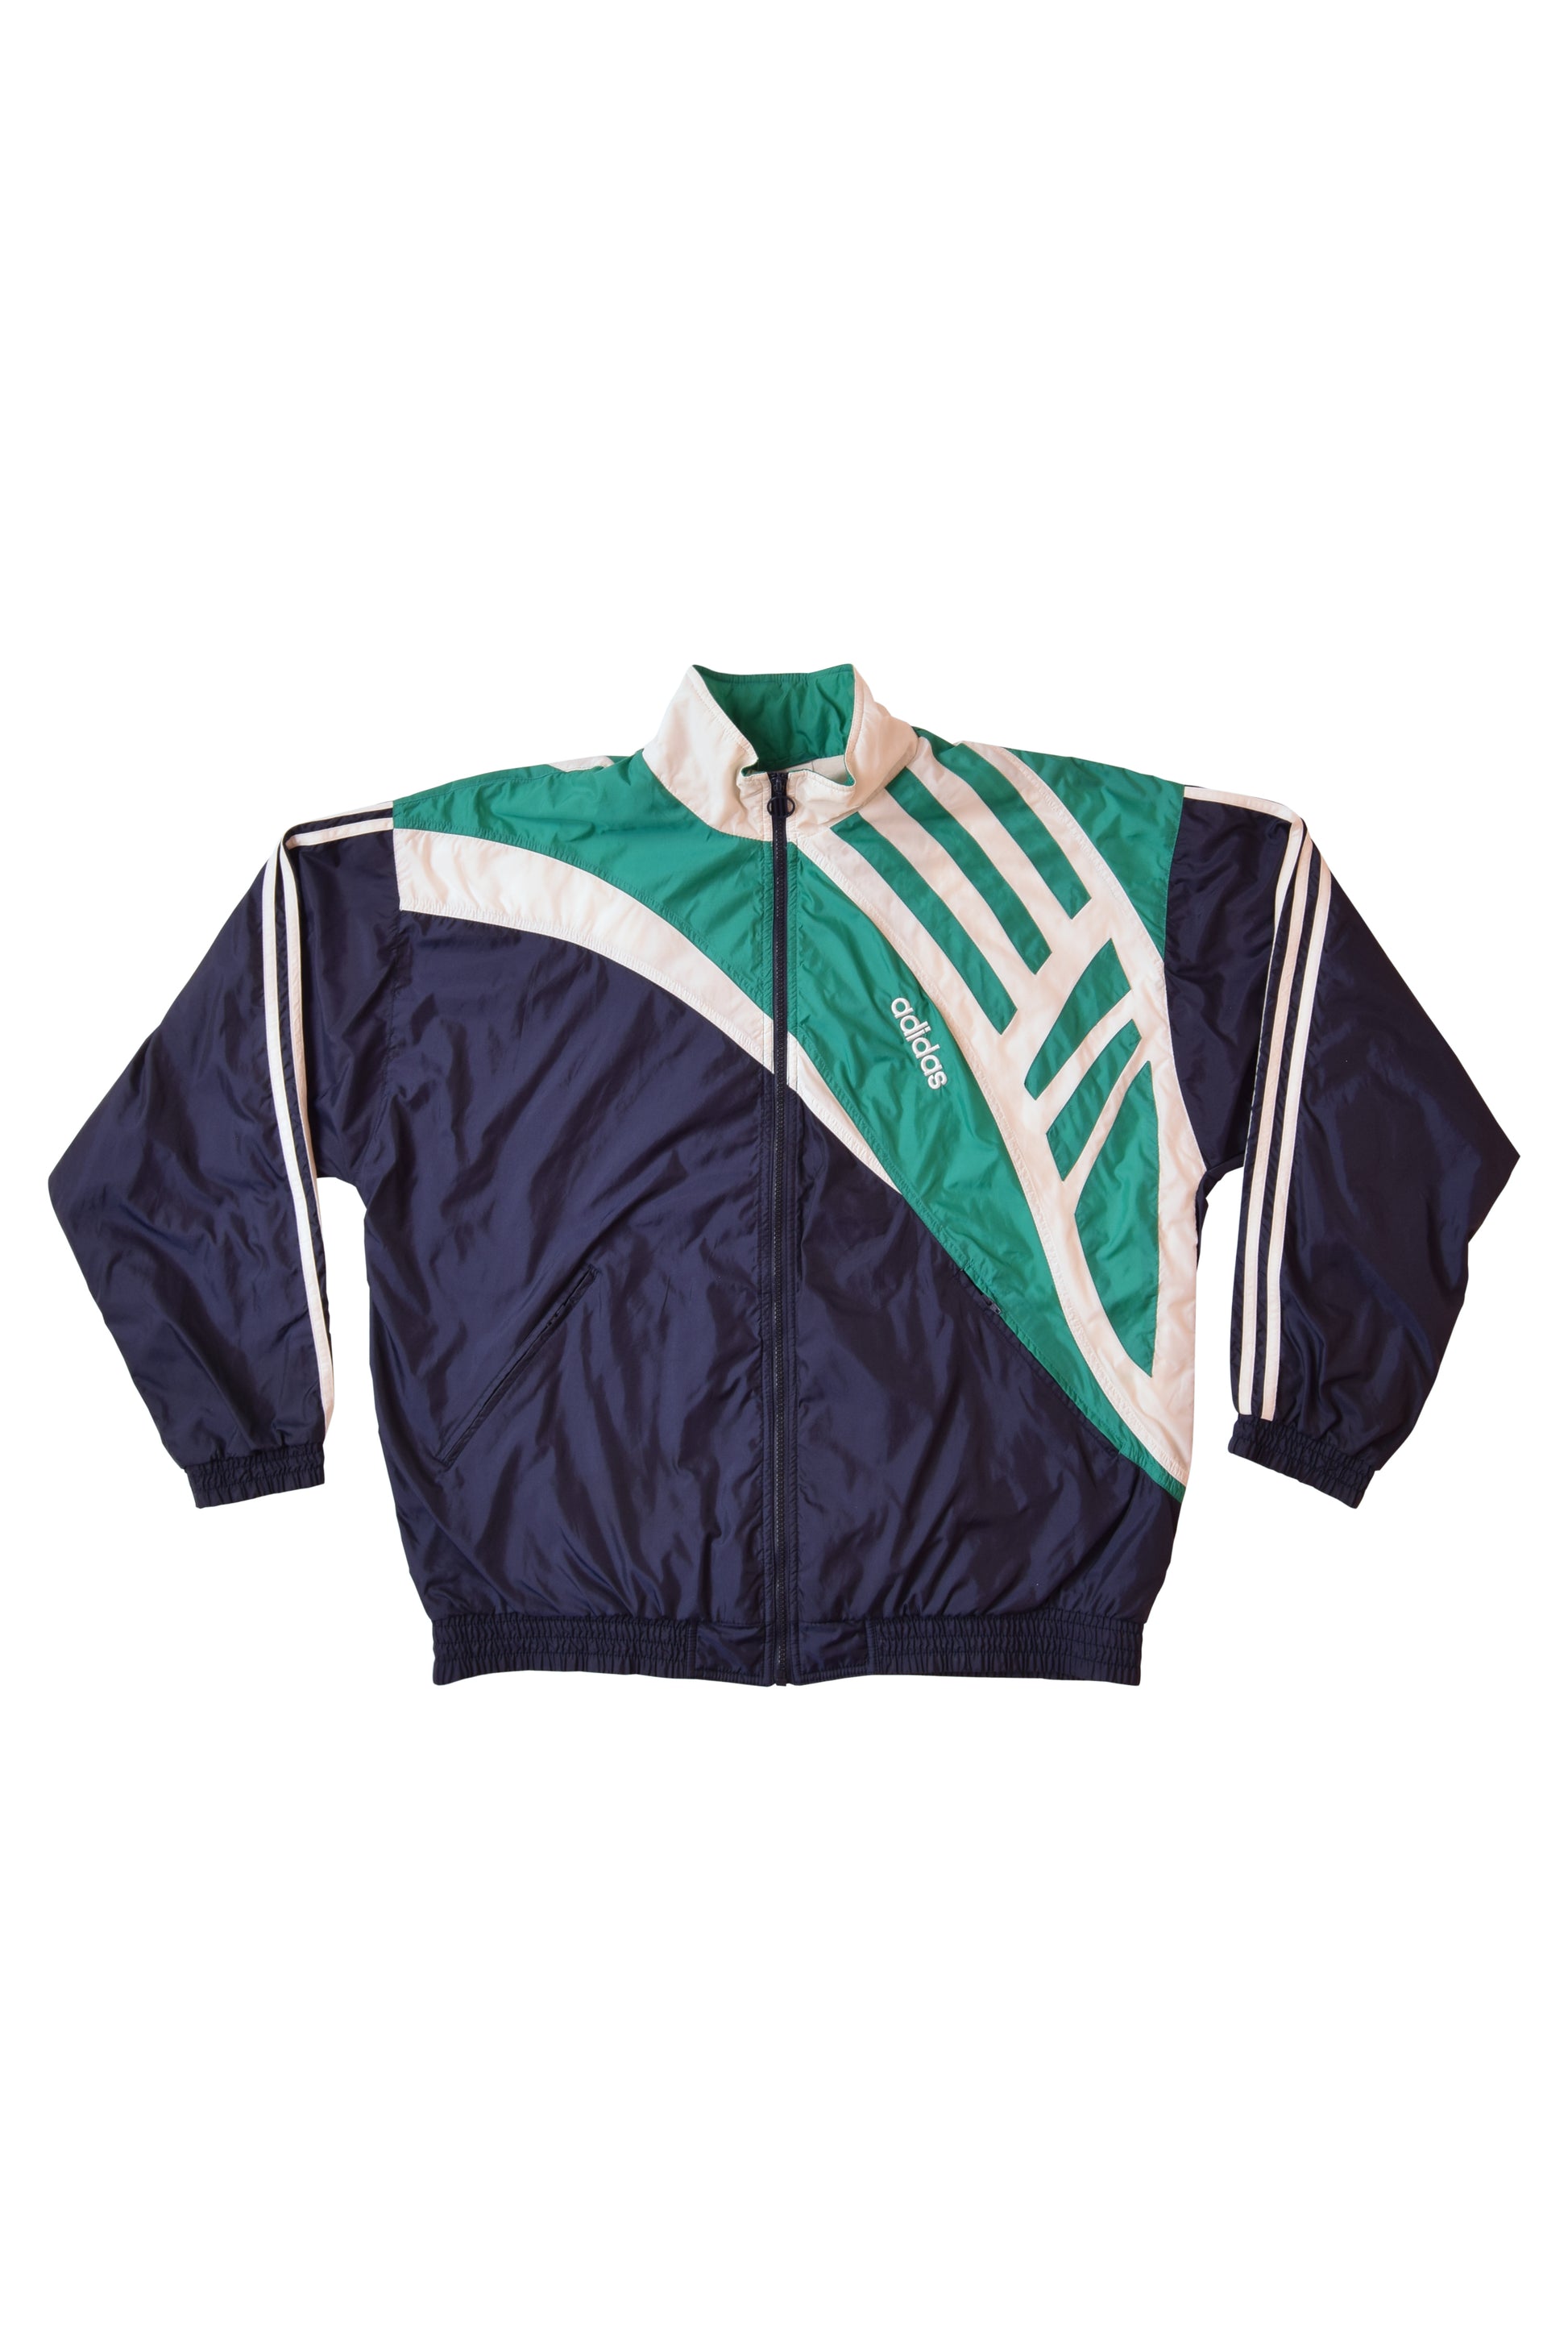 Vintage Adidas Jacket / Shell 90's